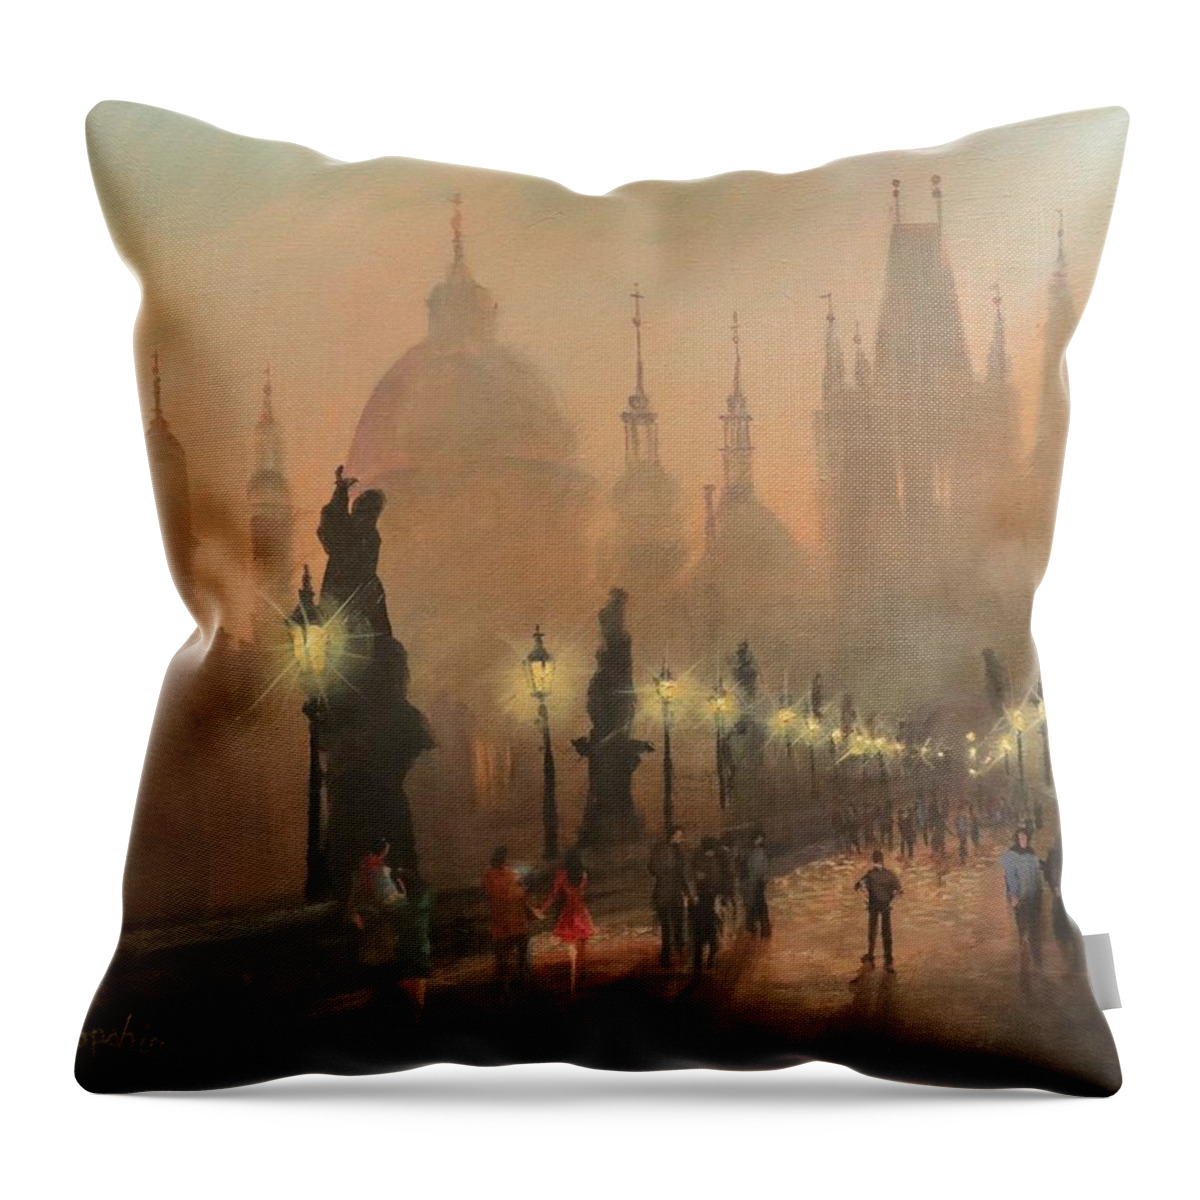 Charles Bridge Throw Pillow featuring the painting Charles Bridge Prague by Tom Shropshire